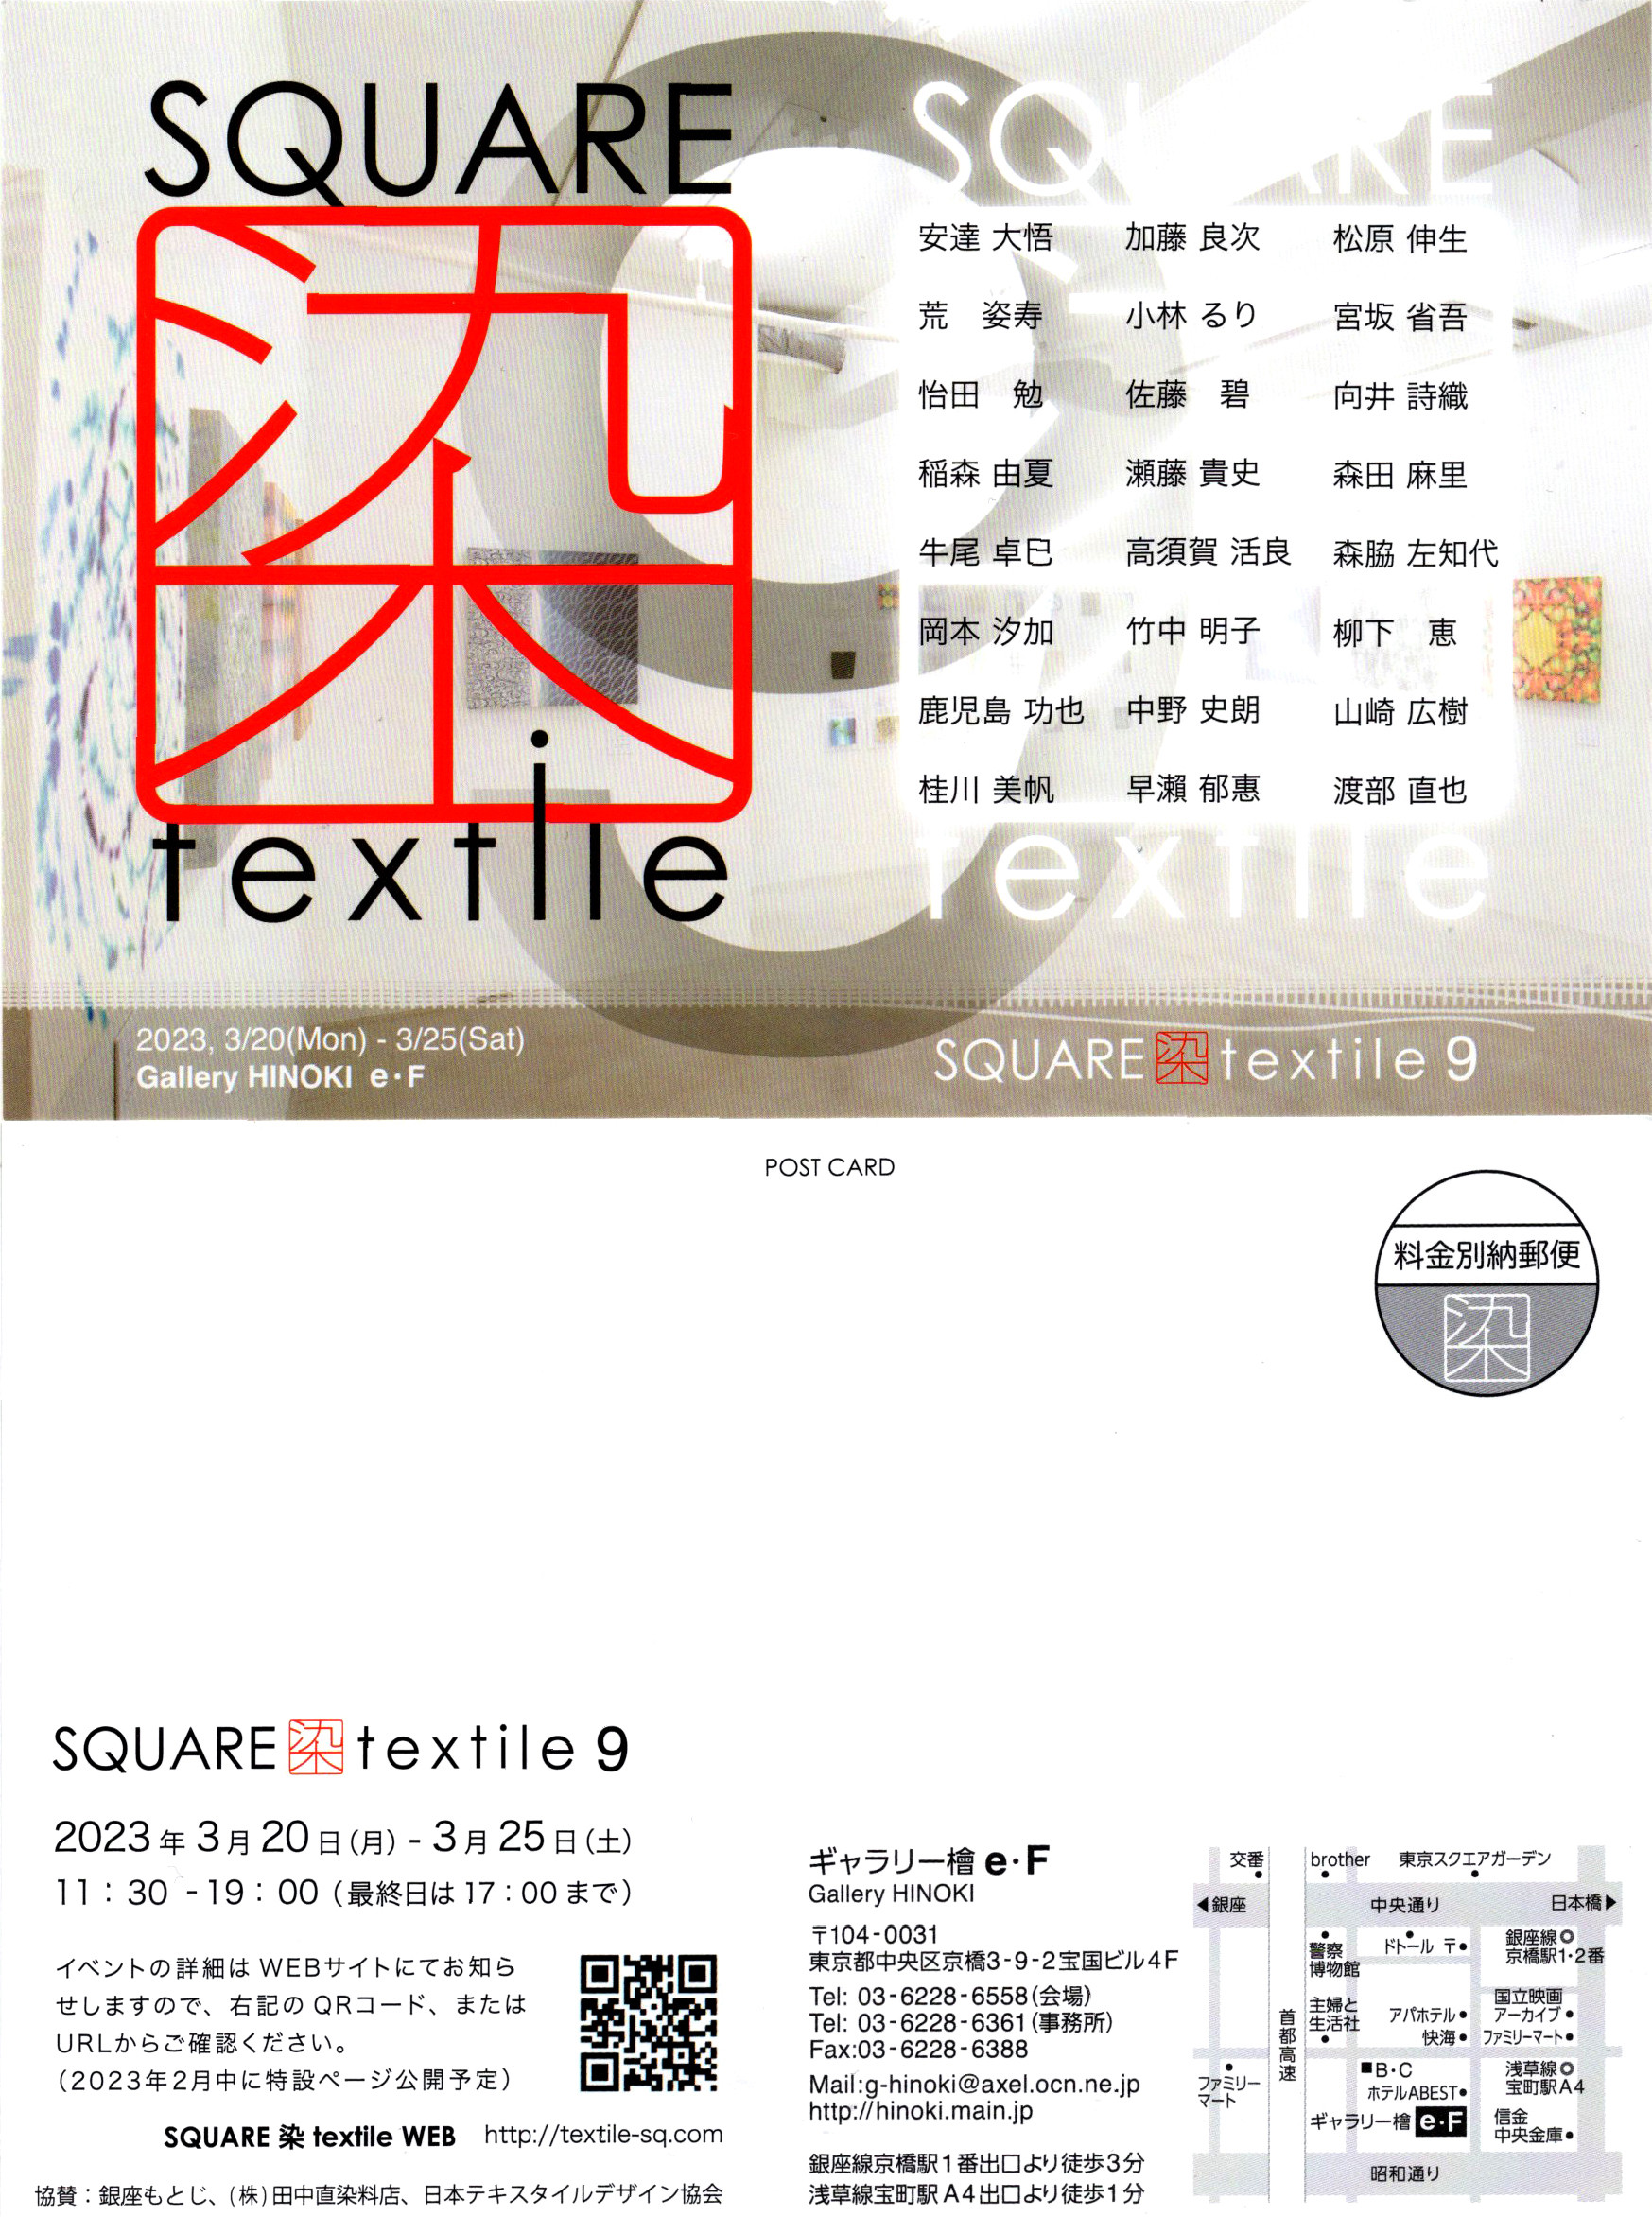 「SQUARE 染 textile ９」に参加します！